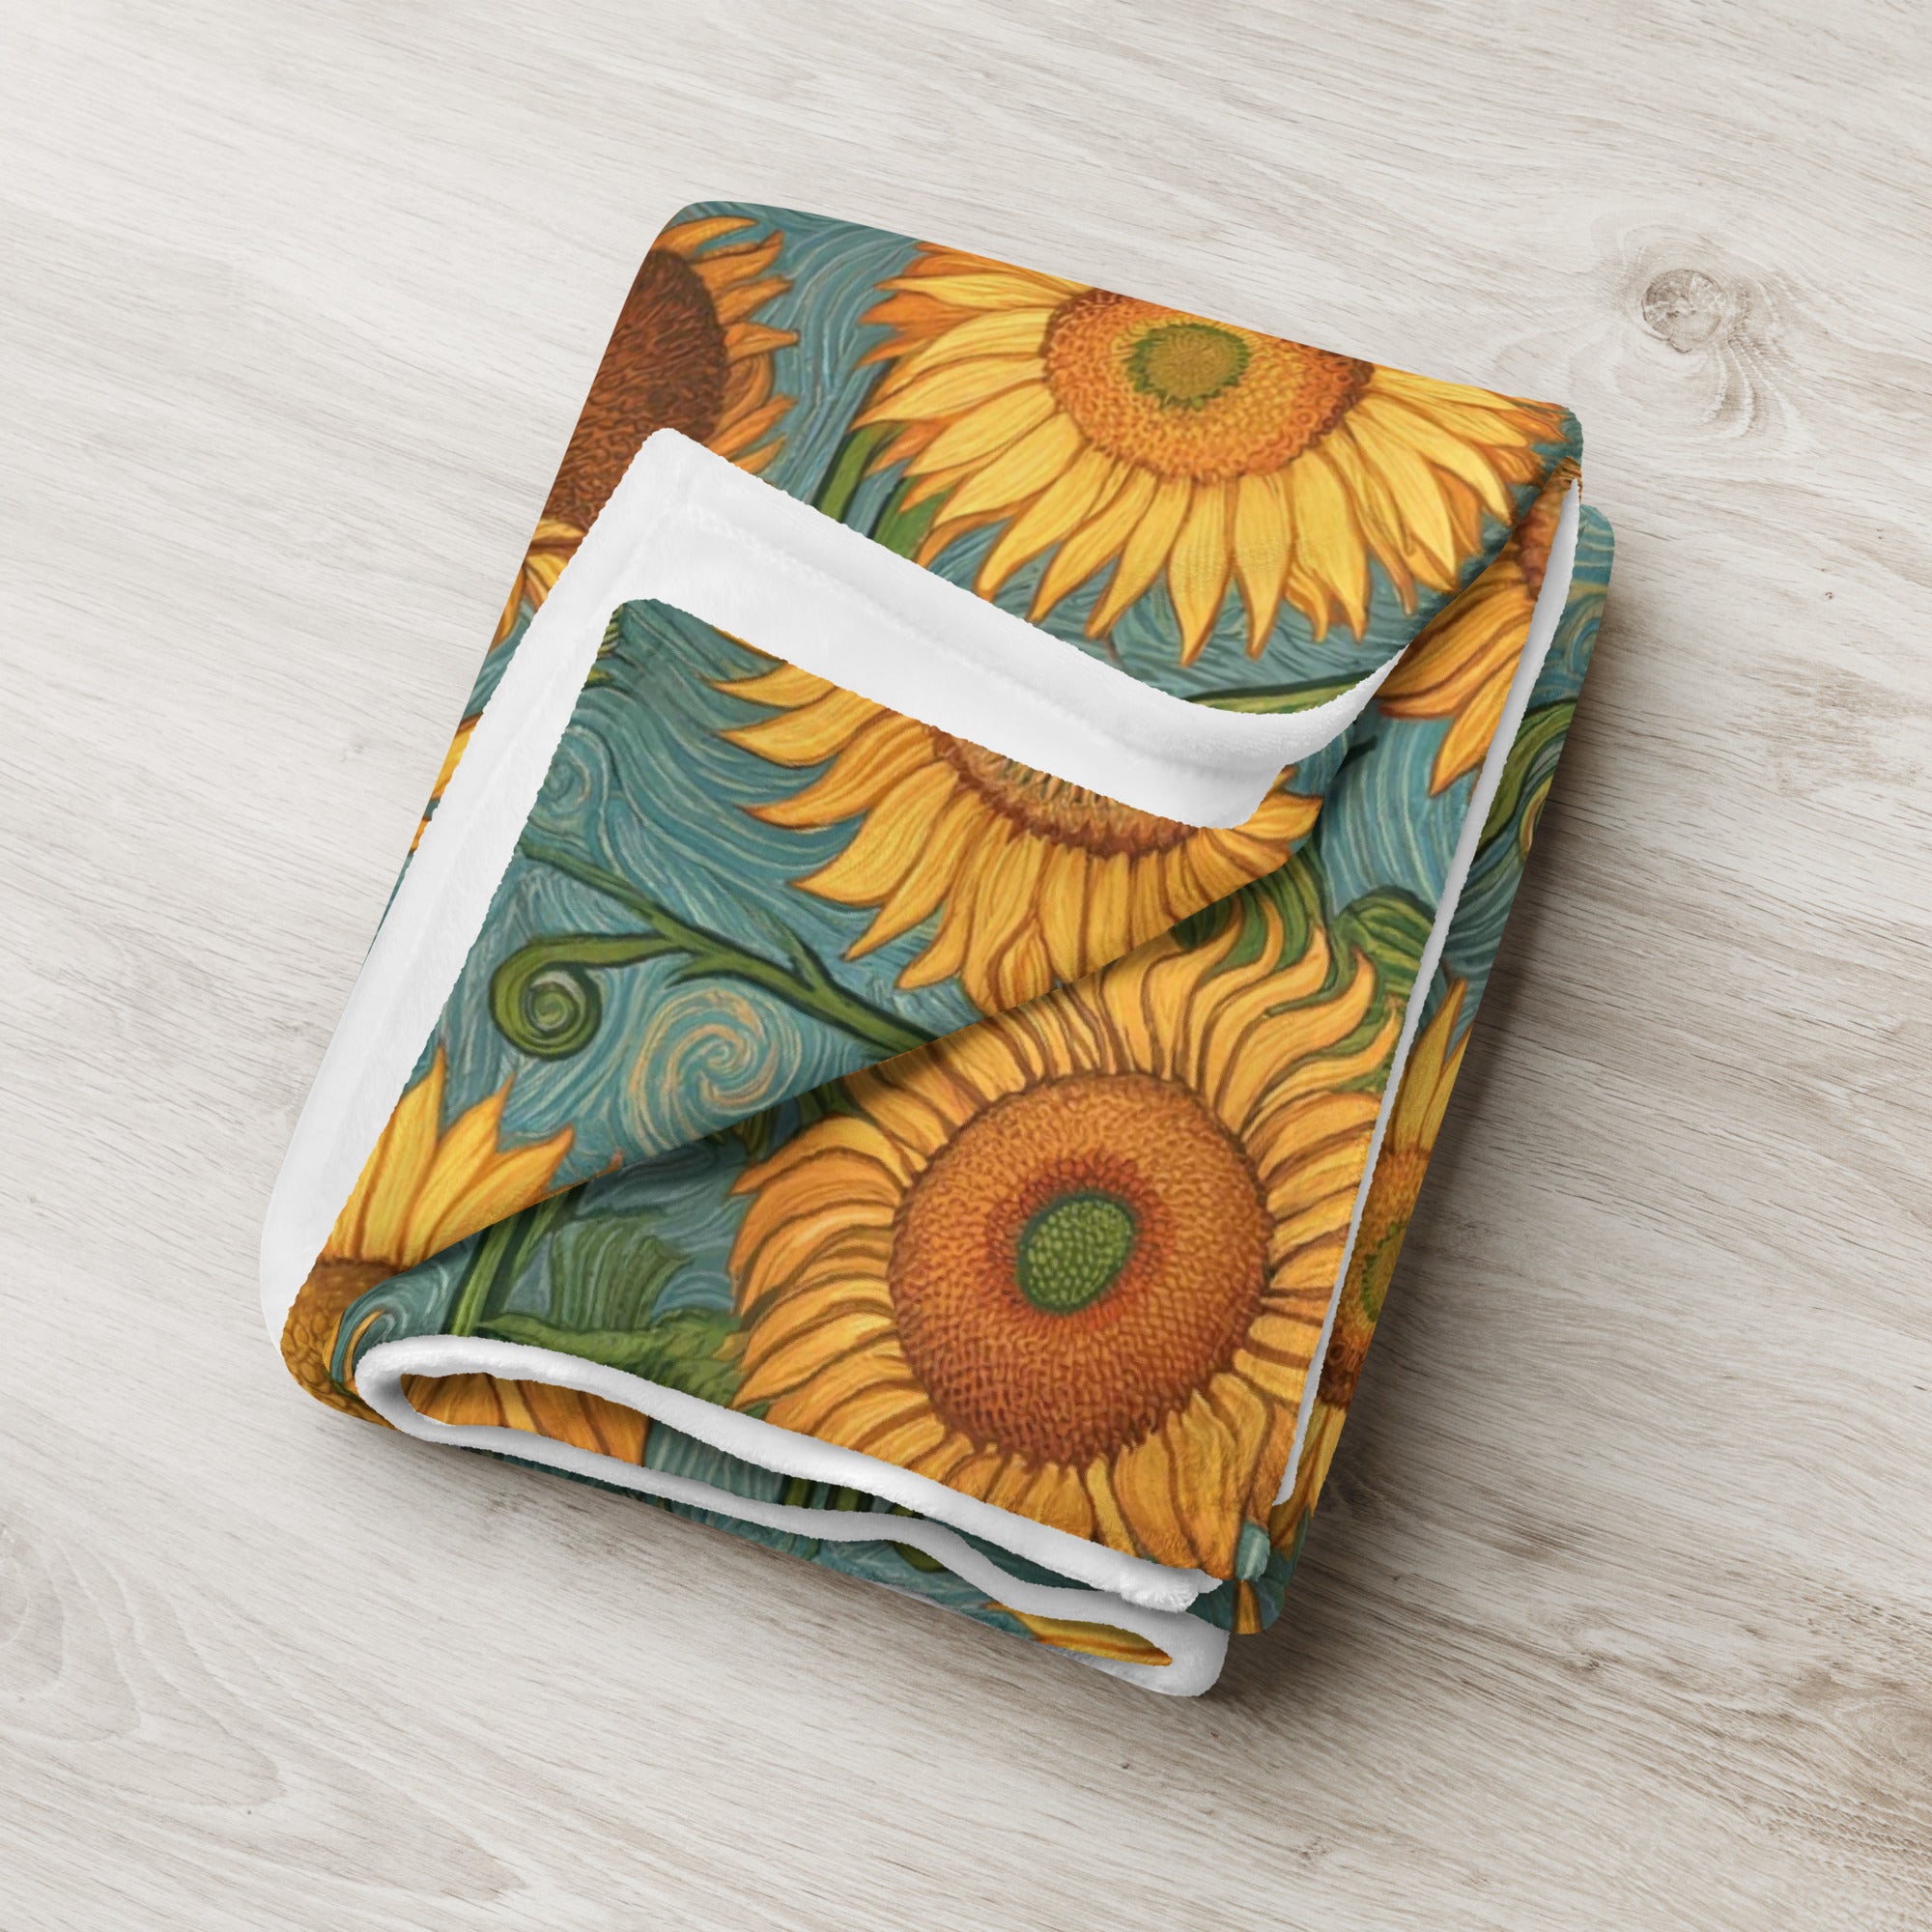 Vincent van Gogh 'Sunflowers' Famous Painting Throw Blanket | Premium Art Throw